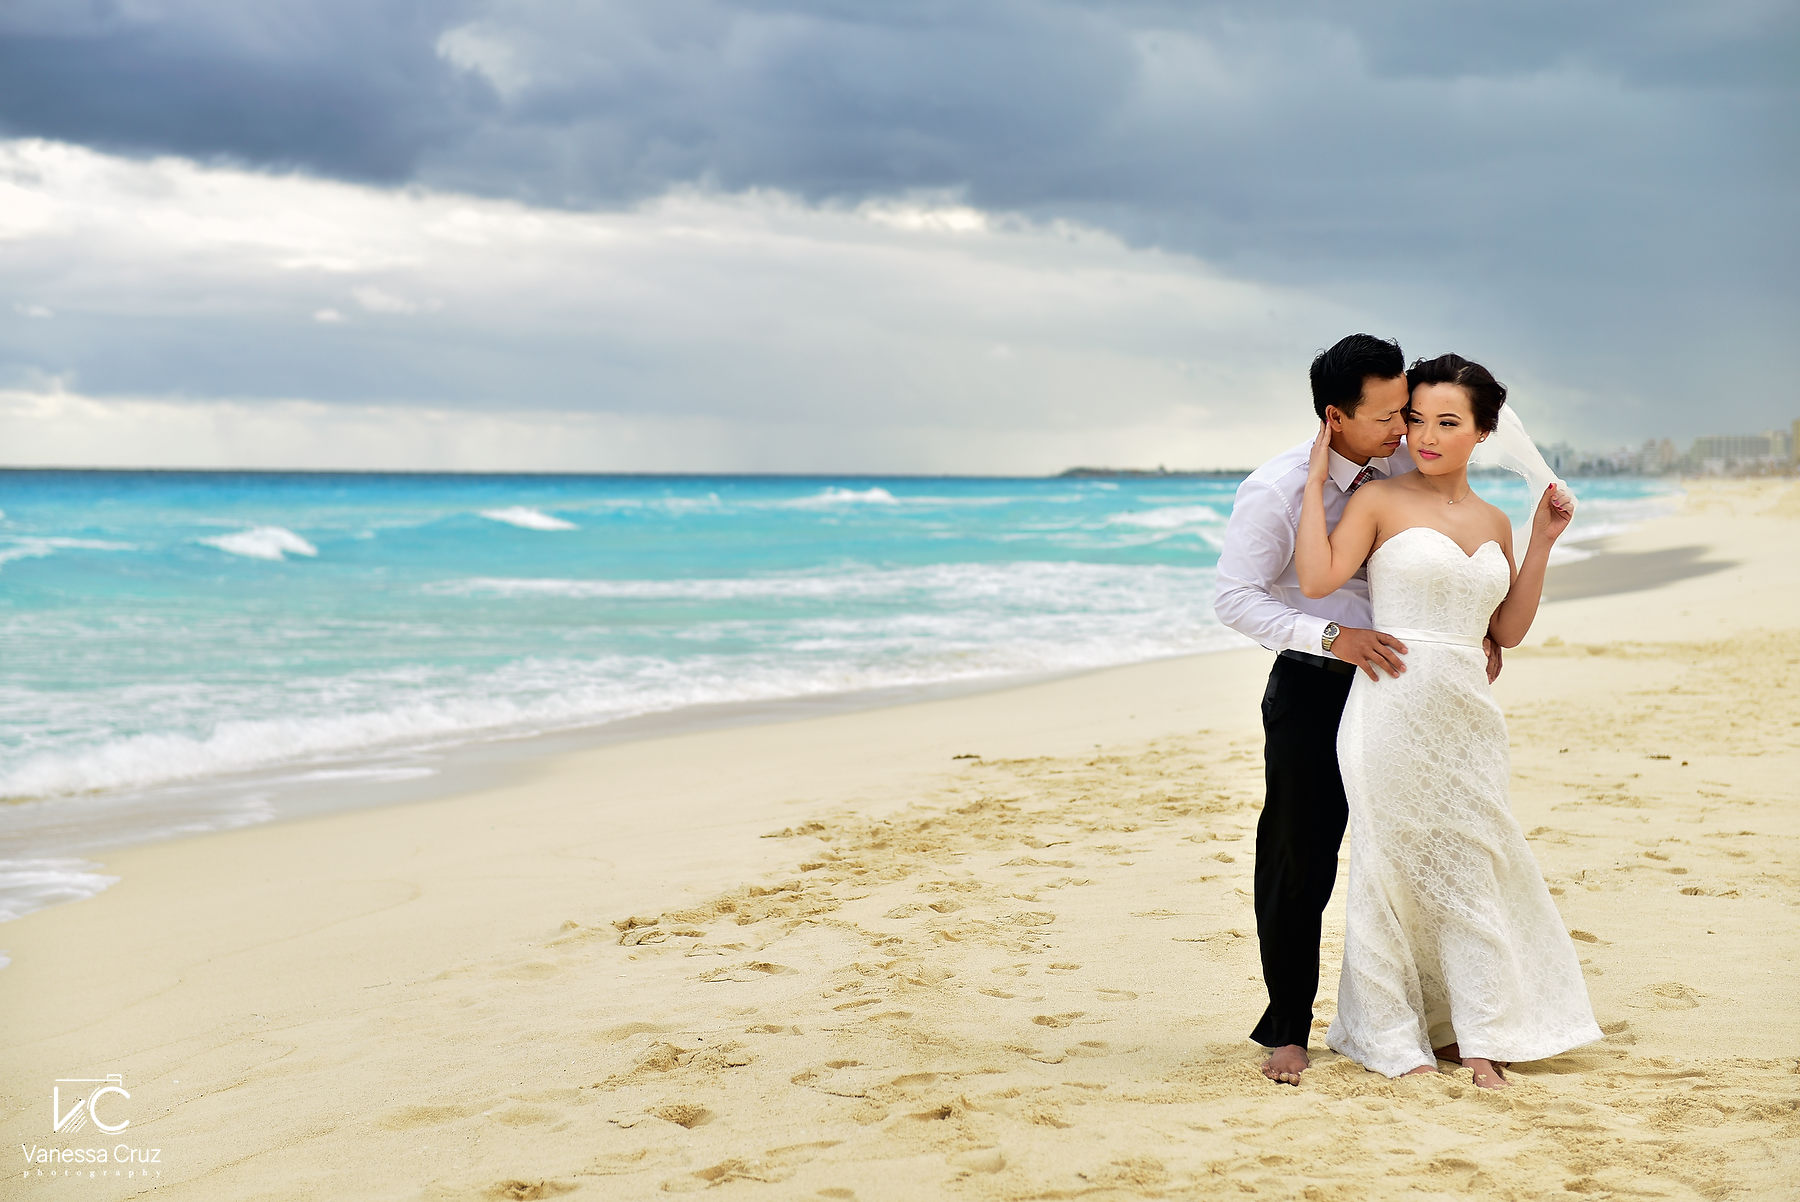 Bride and Groom Cancun Beach Portrait Paradisus Cancun Mexico